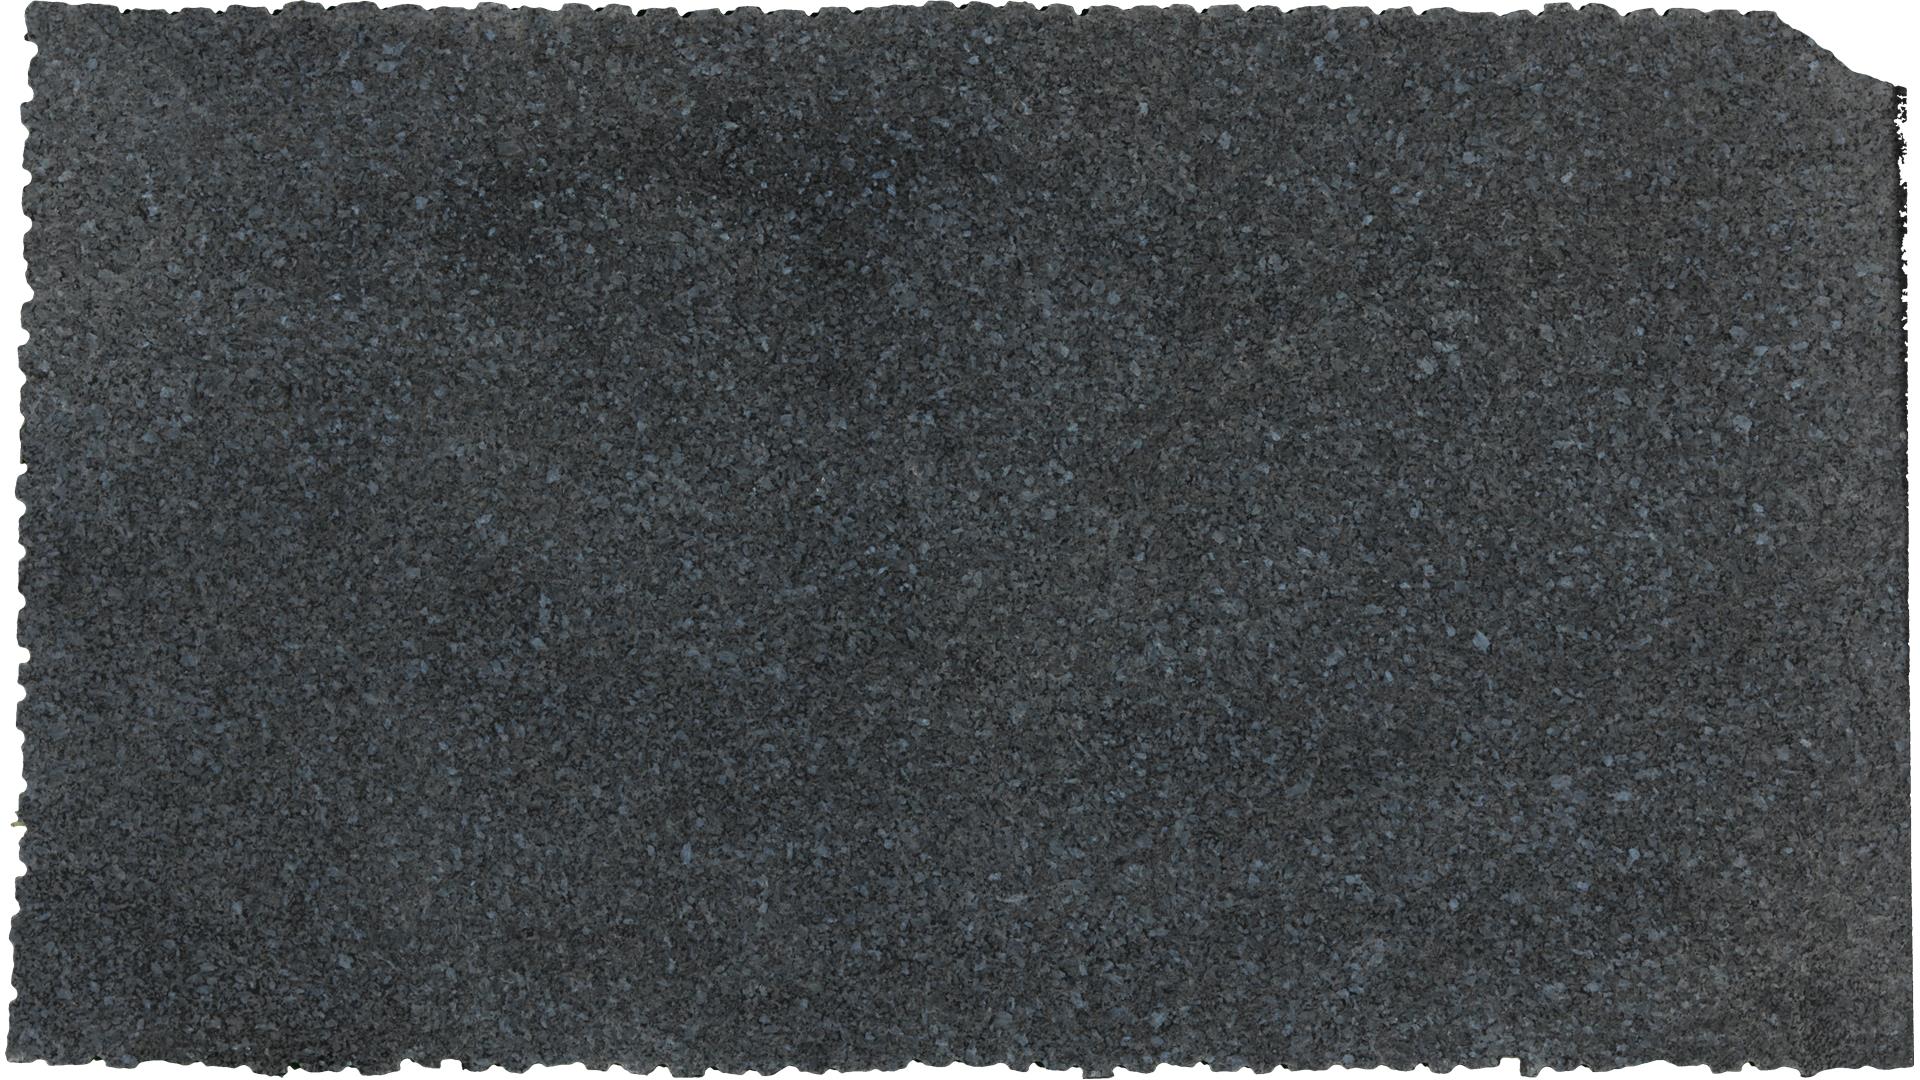 Blue Pearl Royal Granite Slabs